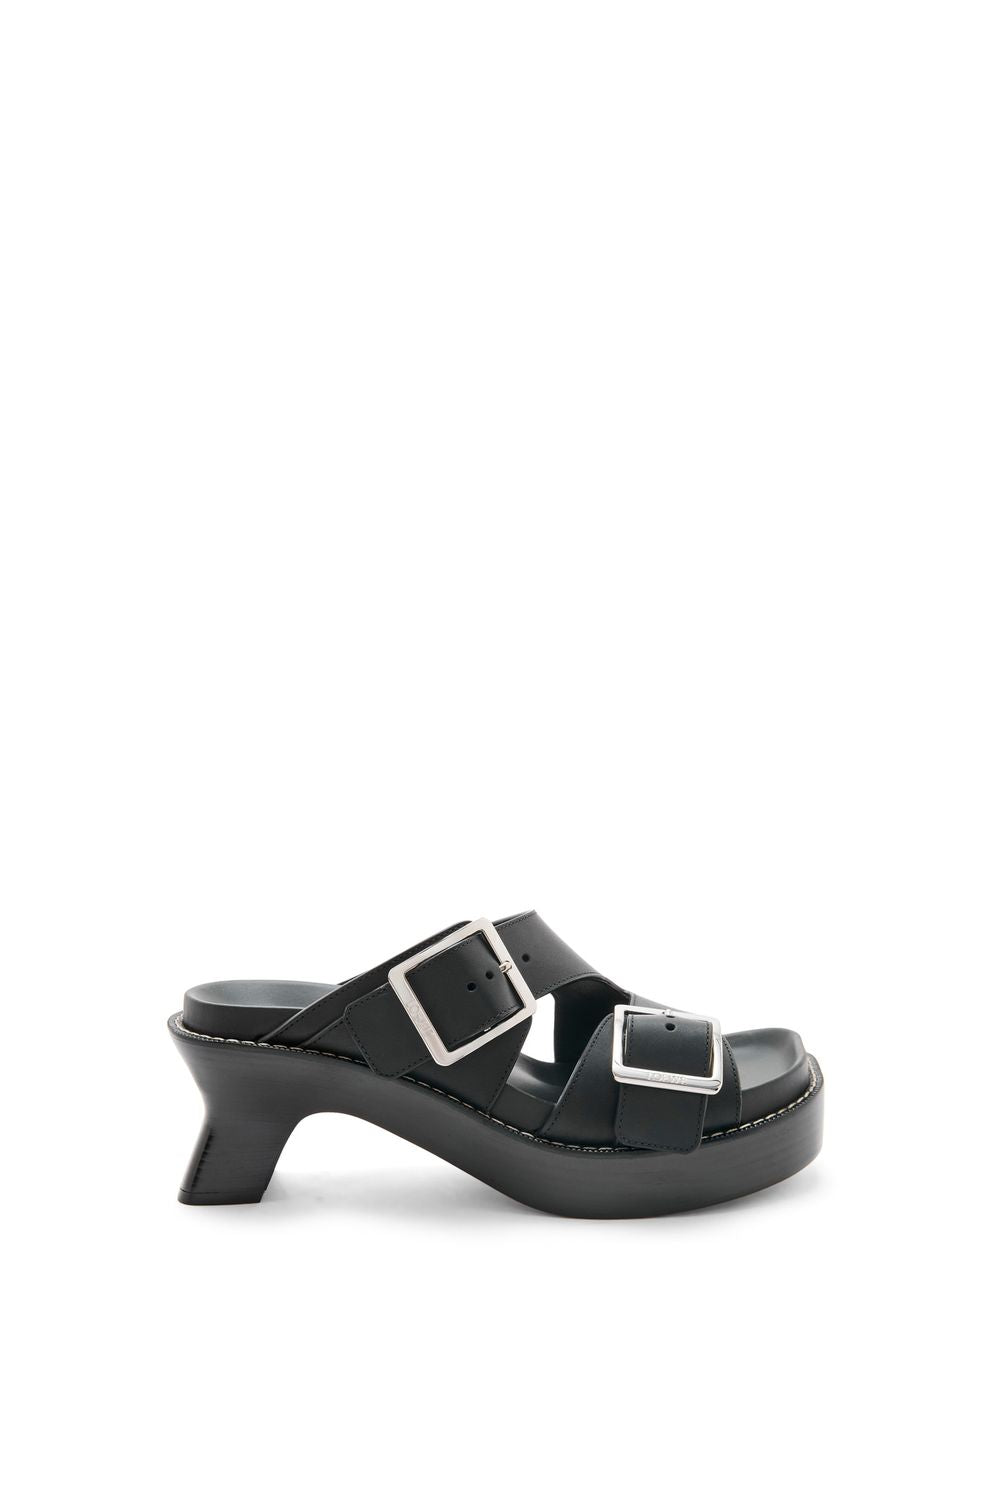 LOEWE Black Leather Heel Slides with Contrast Stitching